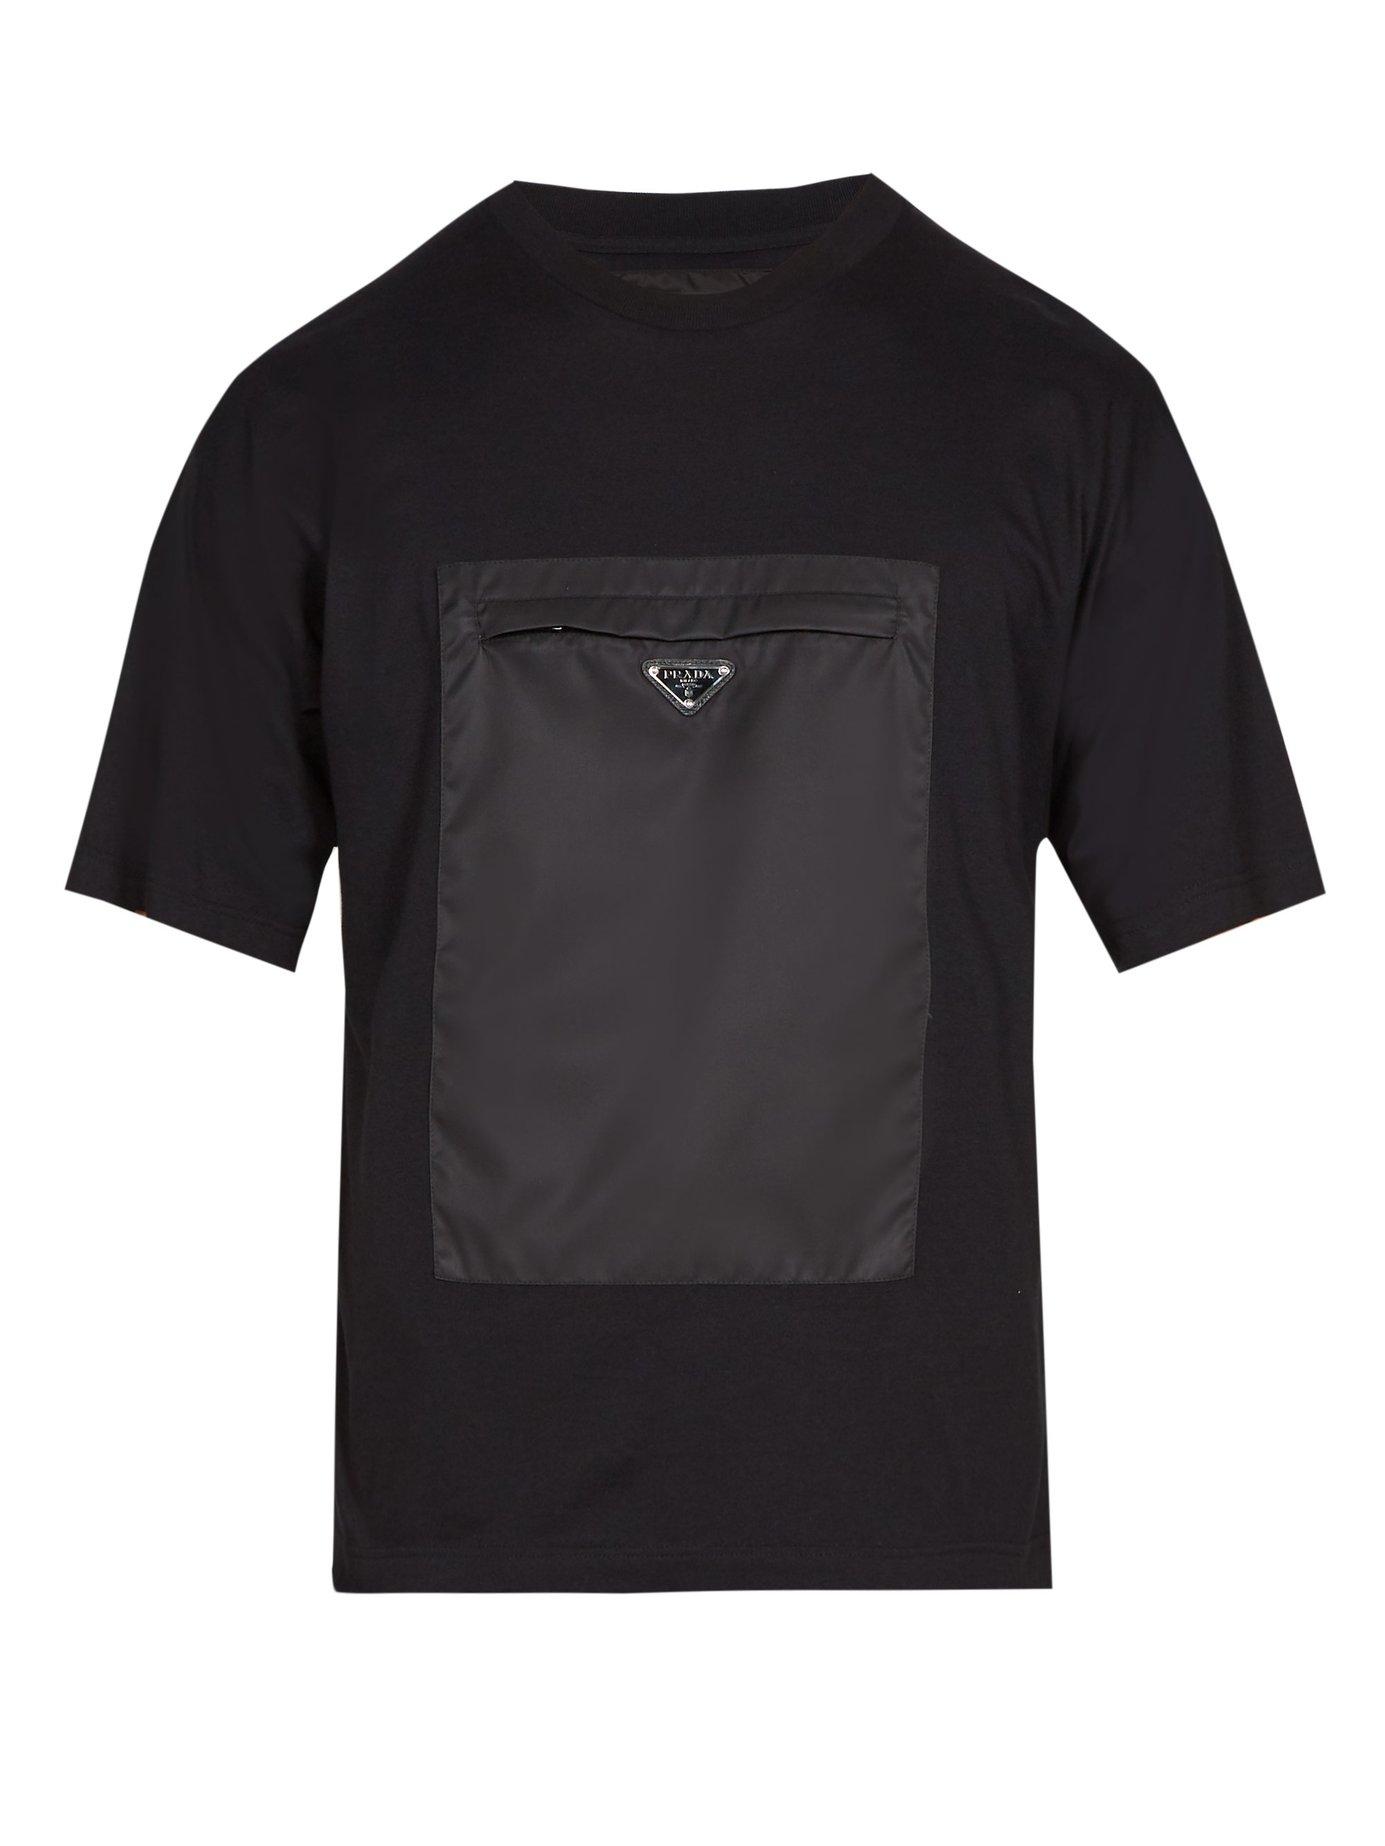 Prada Synthetic Pocket Cotton T Shirt in Black for Men - Lyst